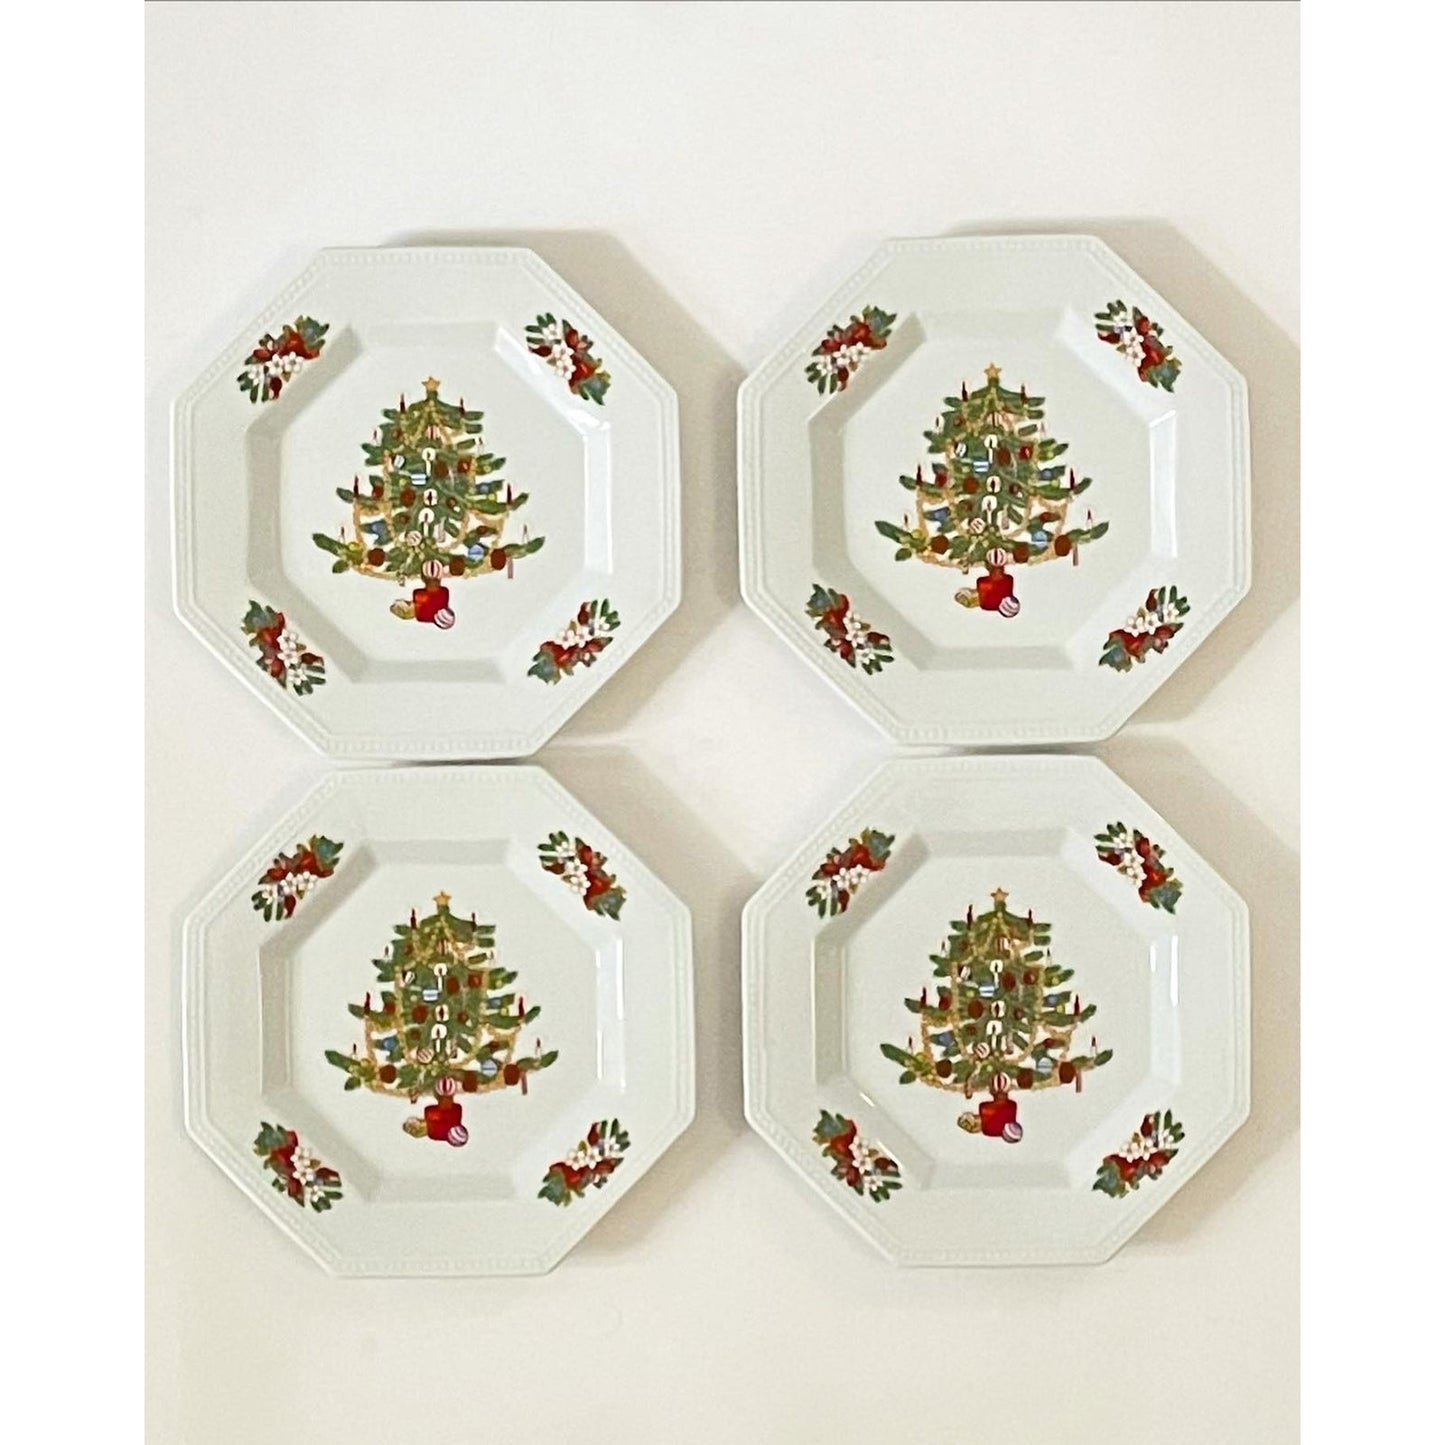 Vintage Small Octagonal Christmas Plates - Set of 4